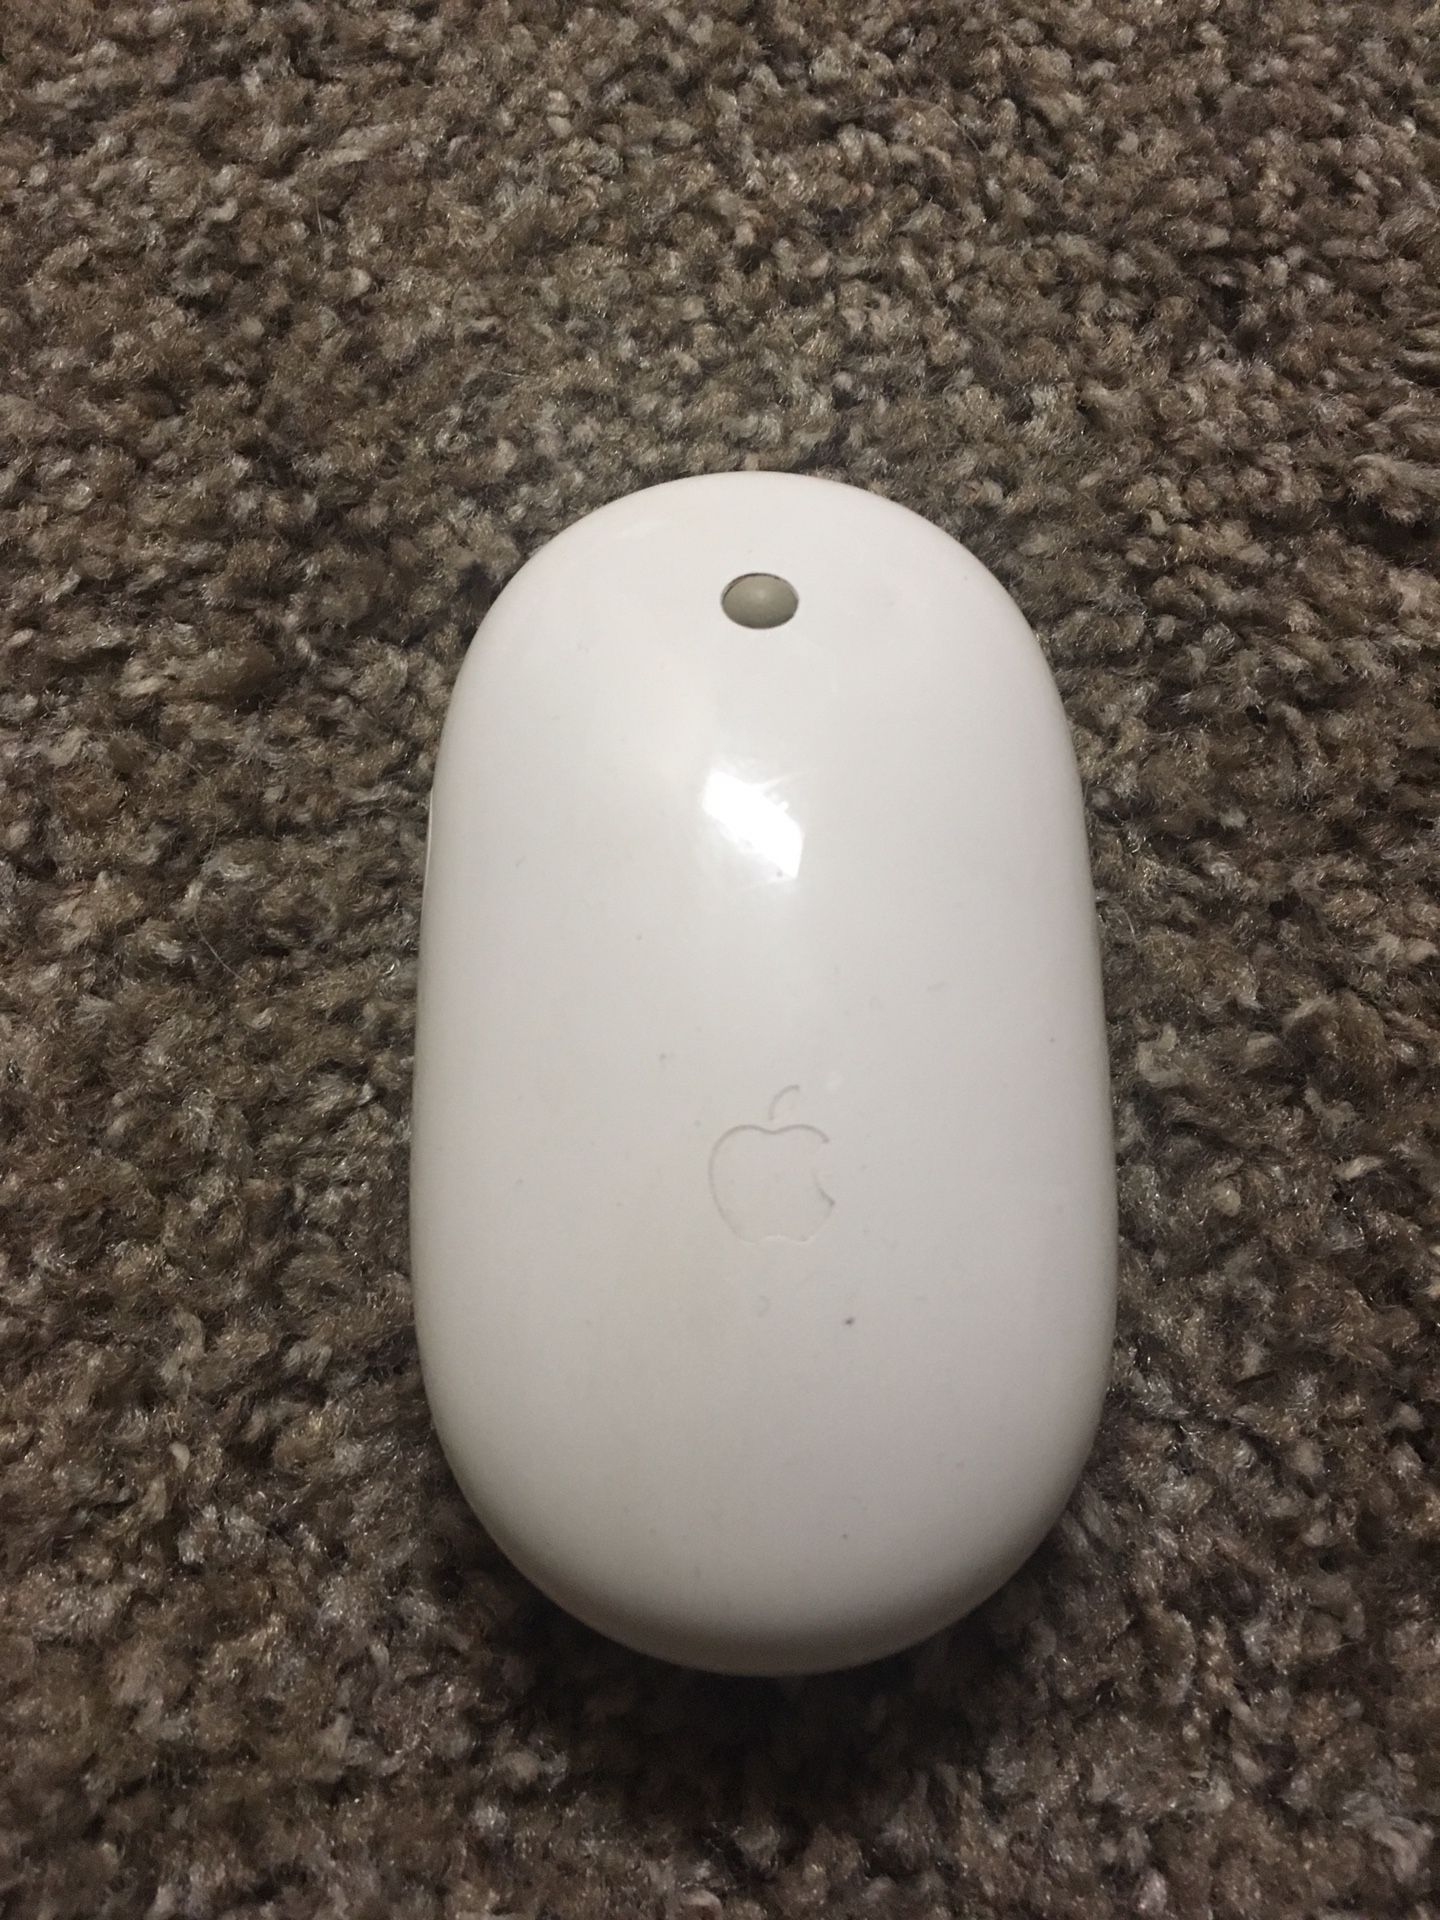 Apple Mac Wireless Mouse Model No. A1197